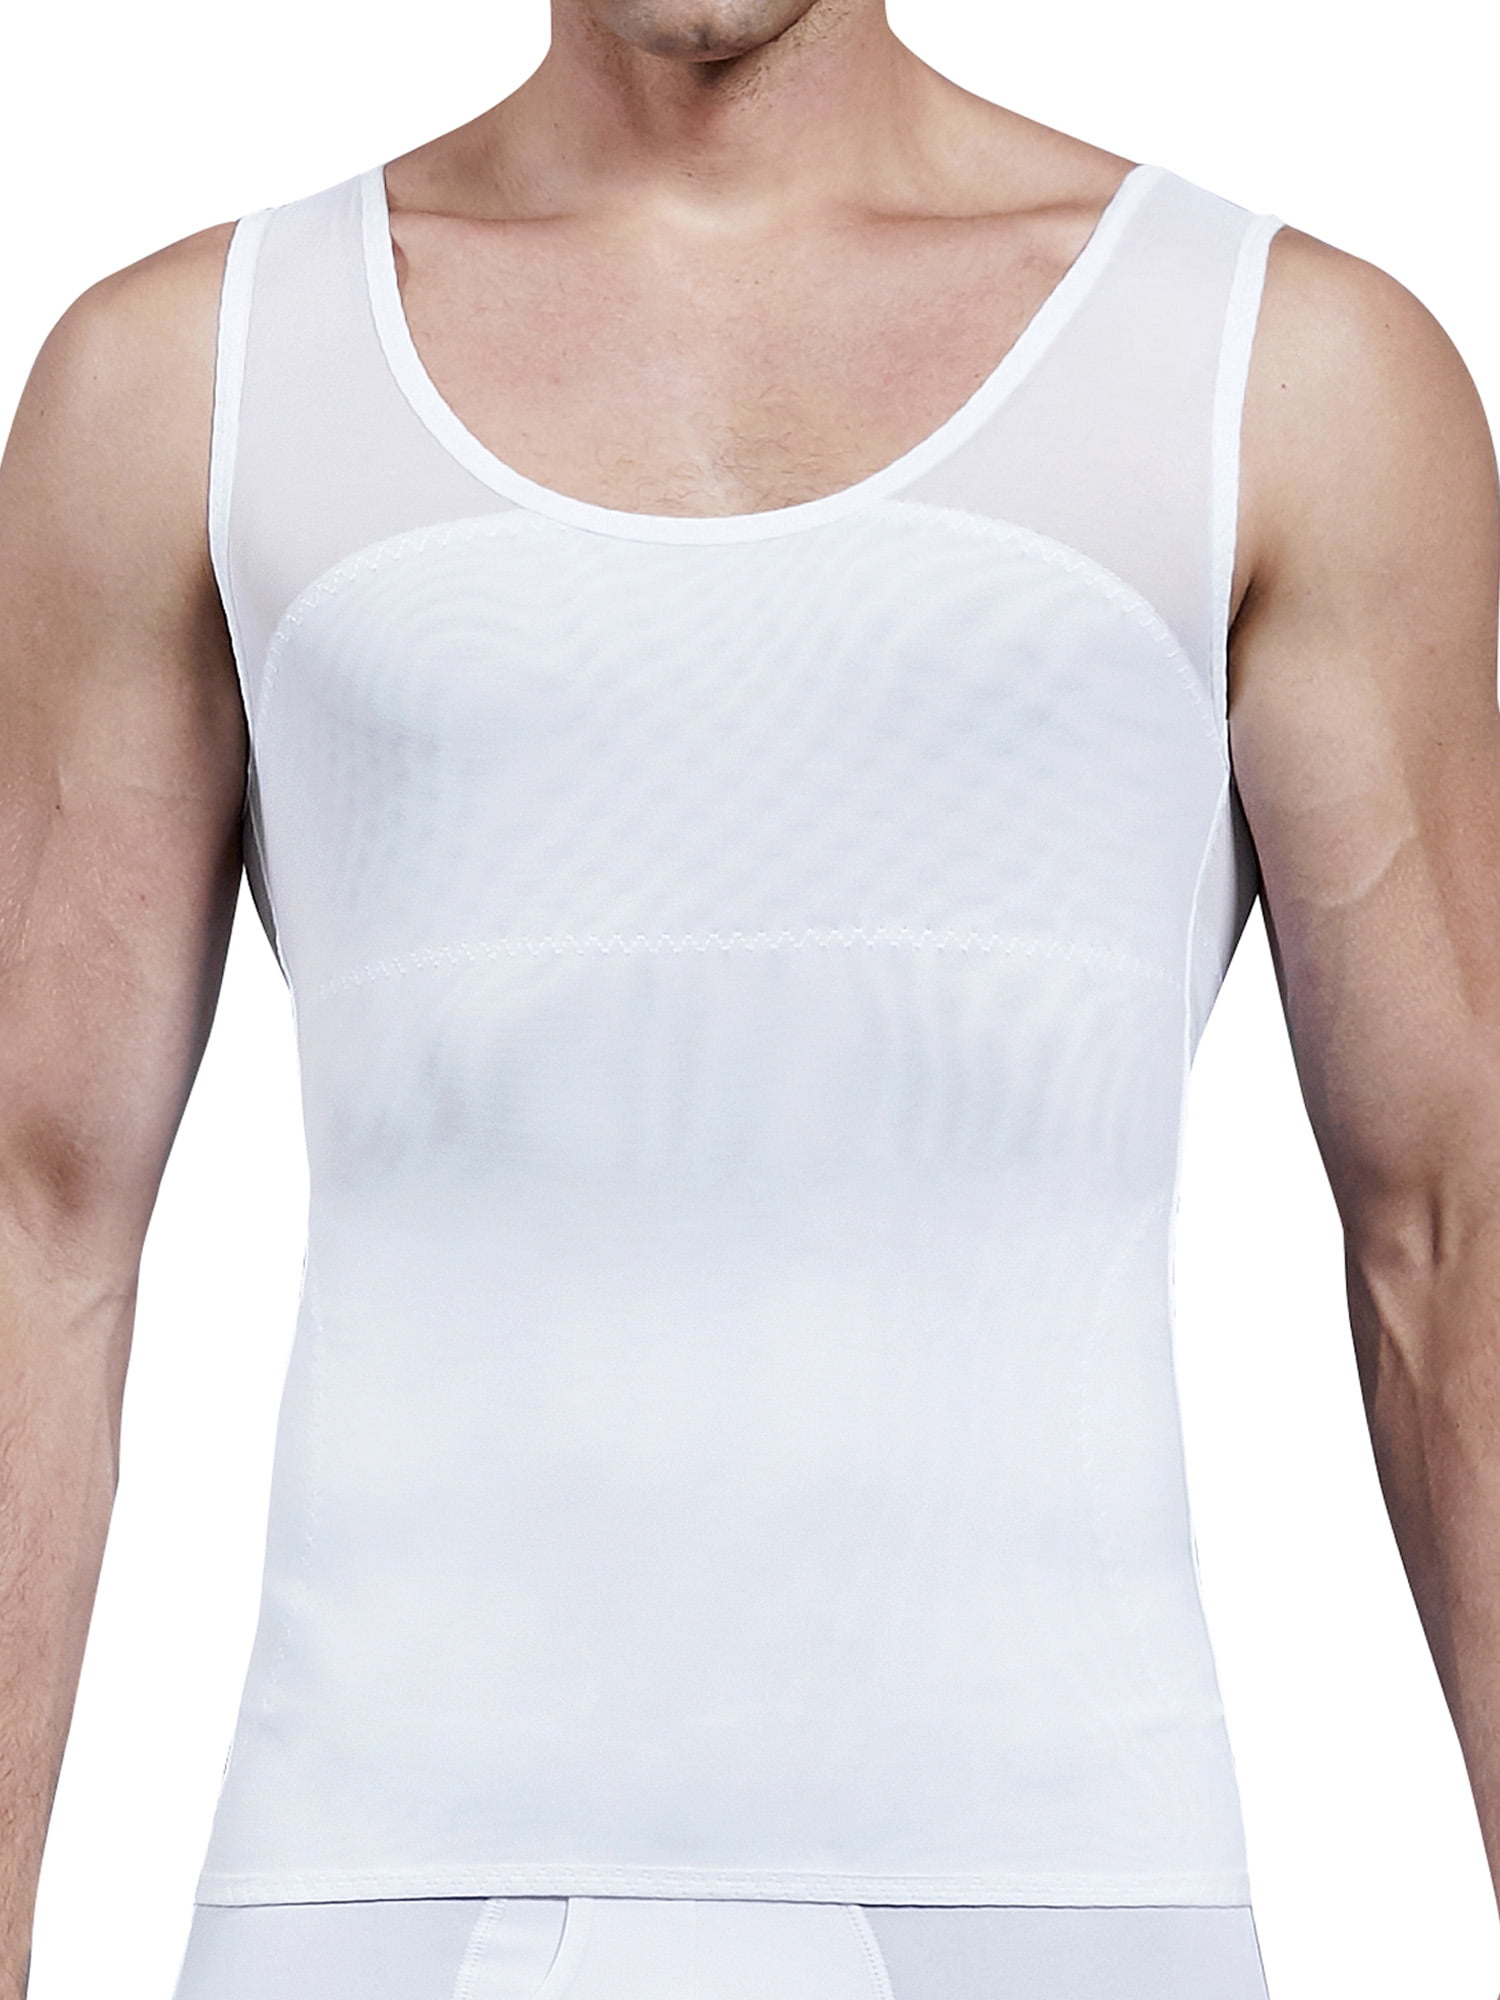 HANERDUN Men Body Shaper Chest Compression Shirt Hide Gynecomastia Moobs Slimming Vest 